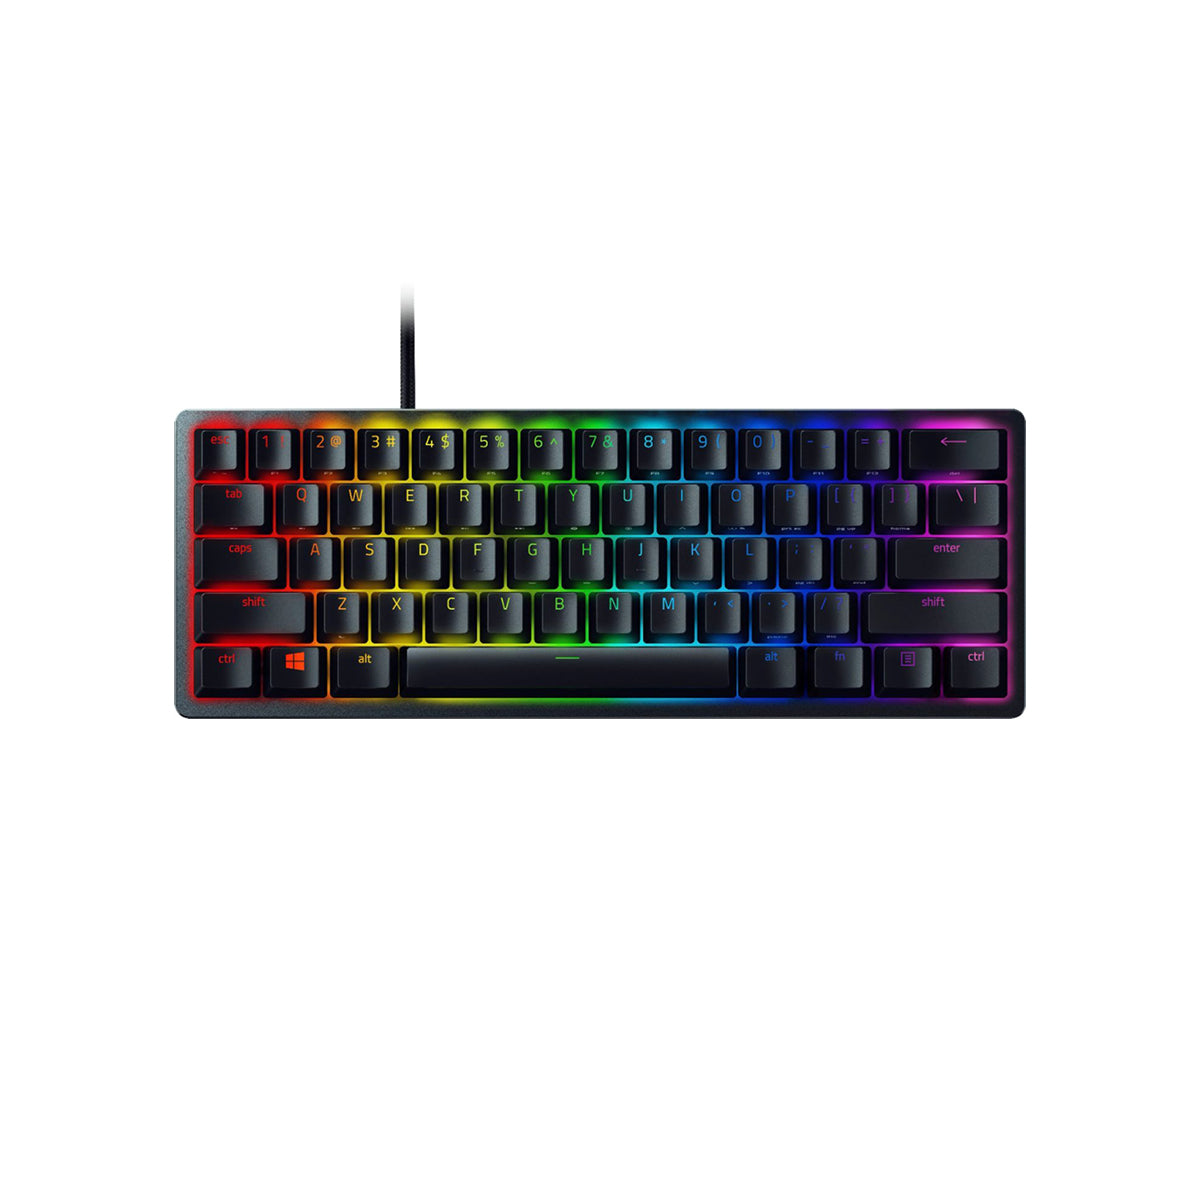  Razer Huntsman Mini 60% Gaming Keyboard: Fast Keyboard